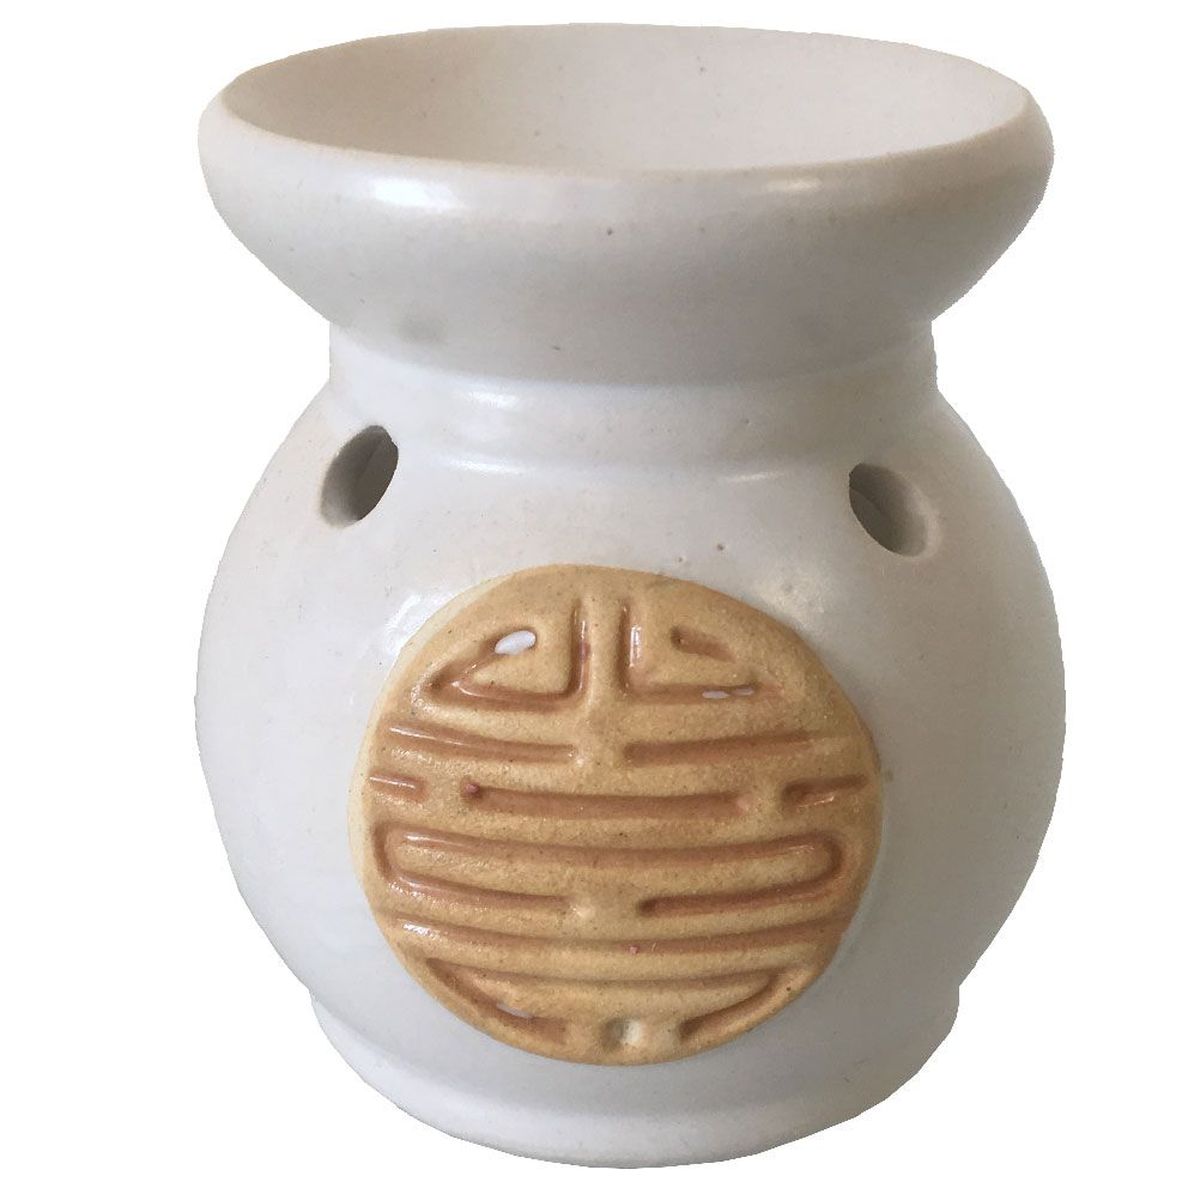 Chinese ceramic perfume diffuser - Beige